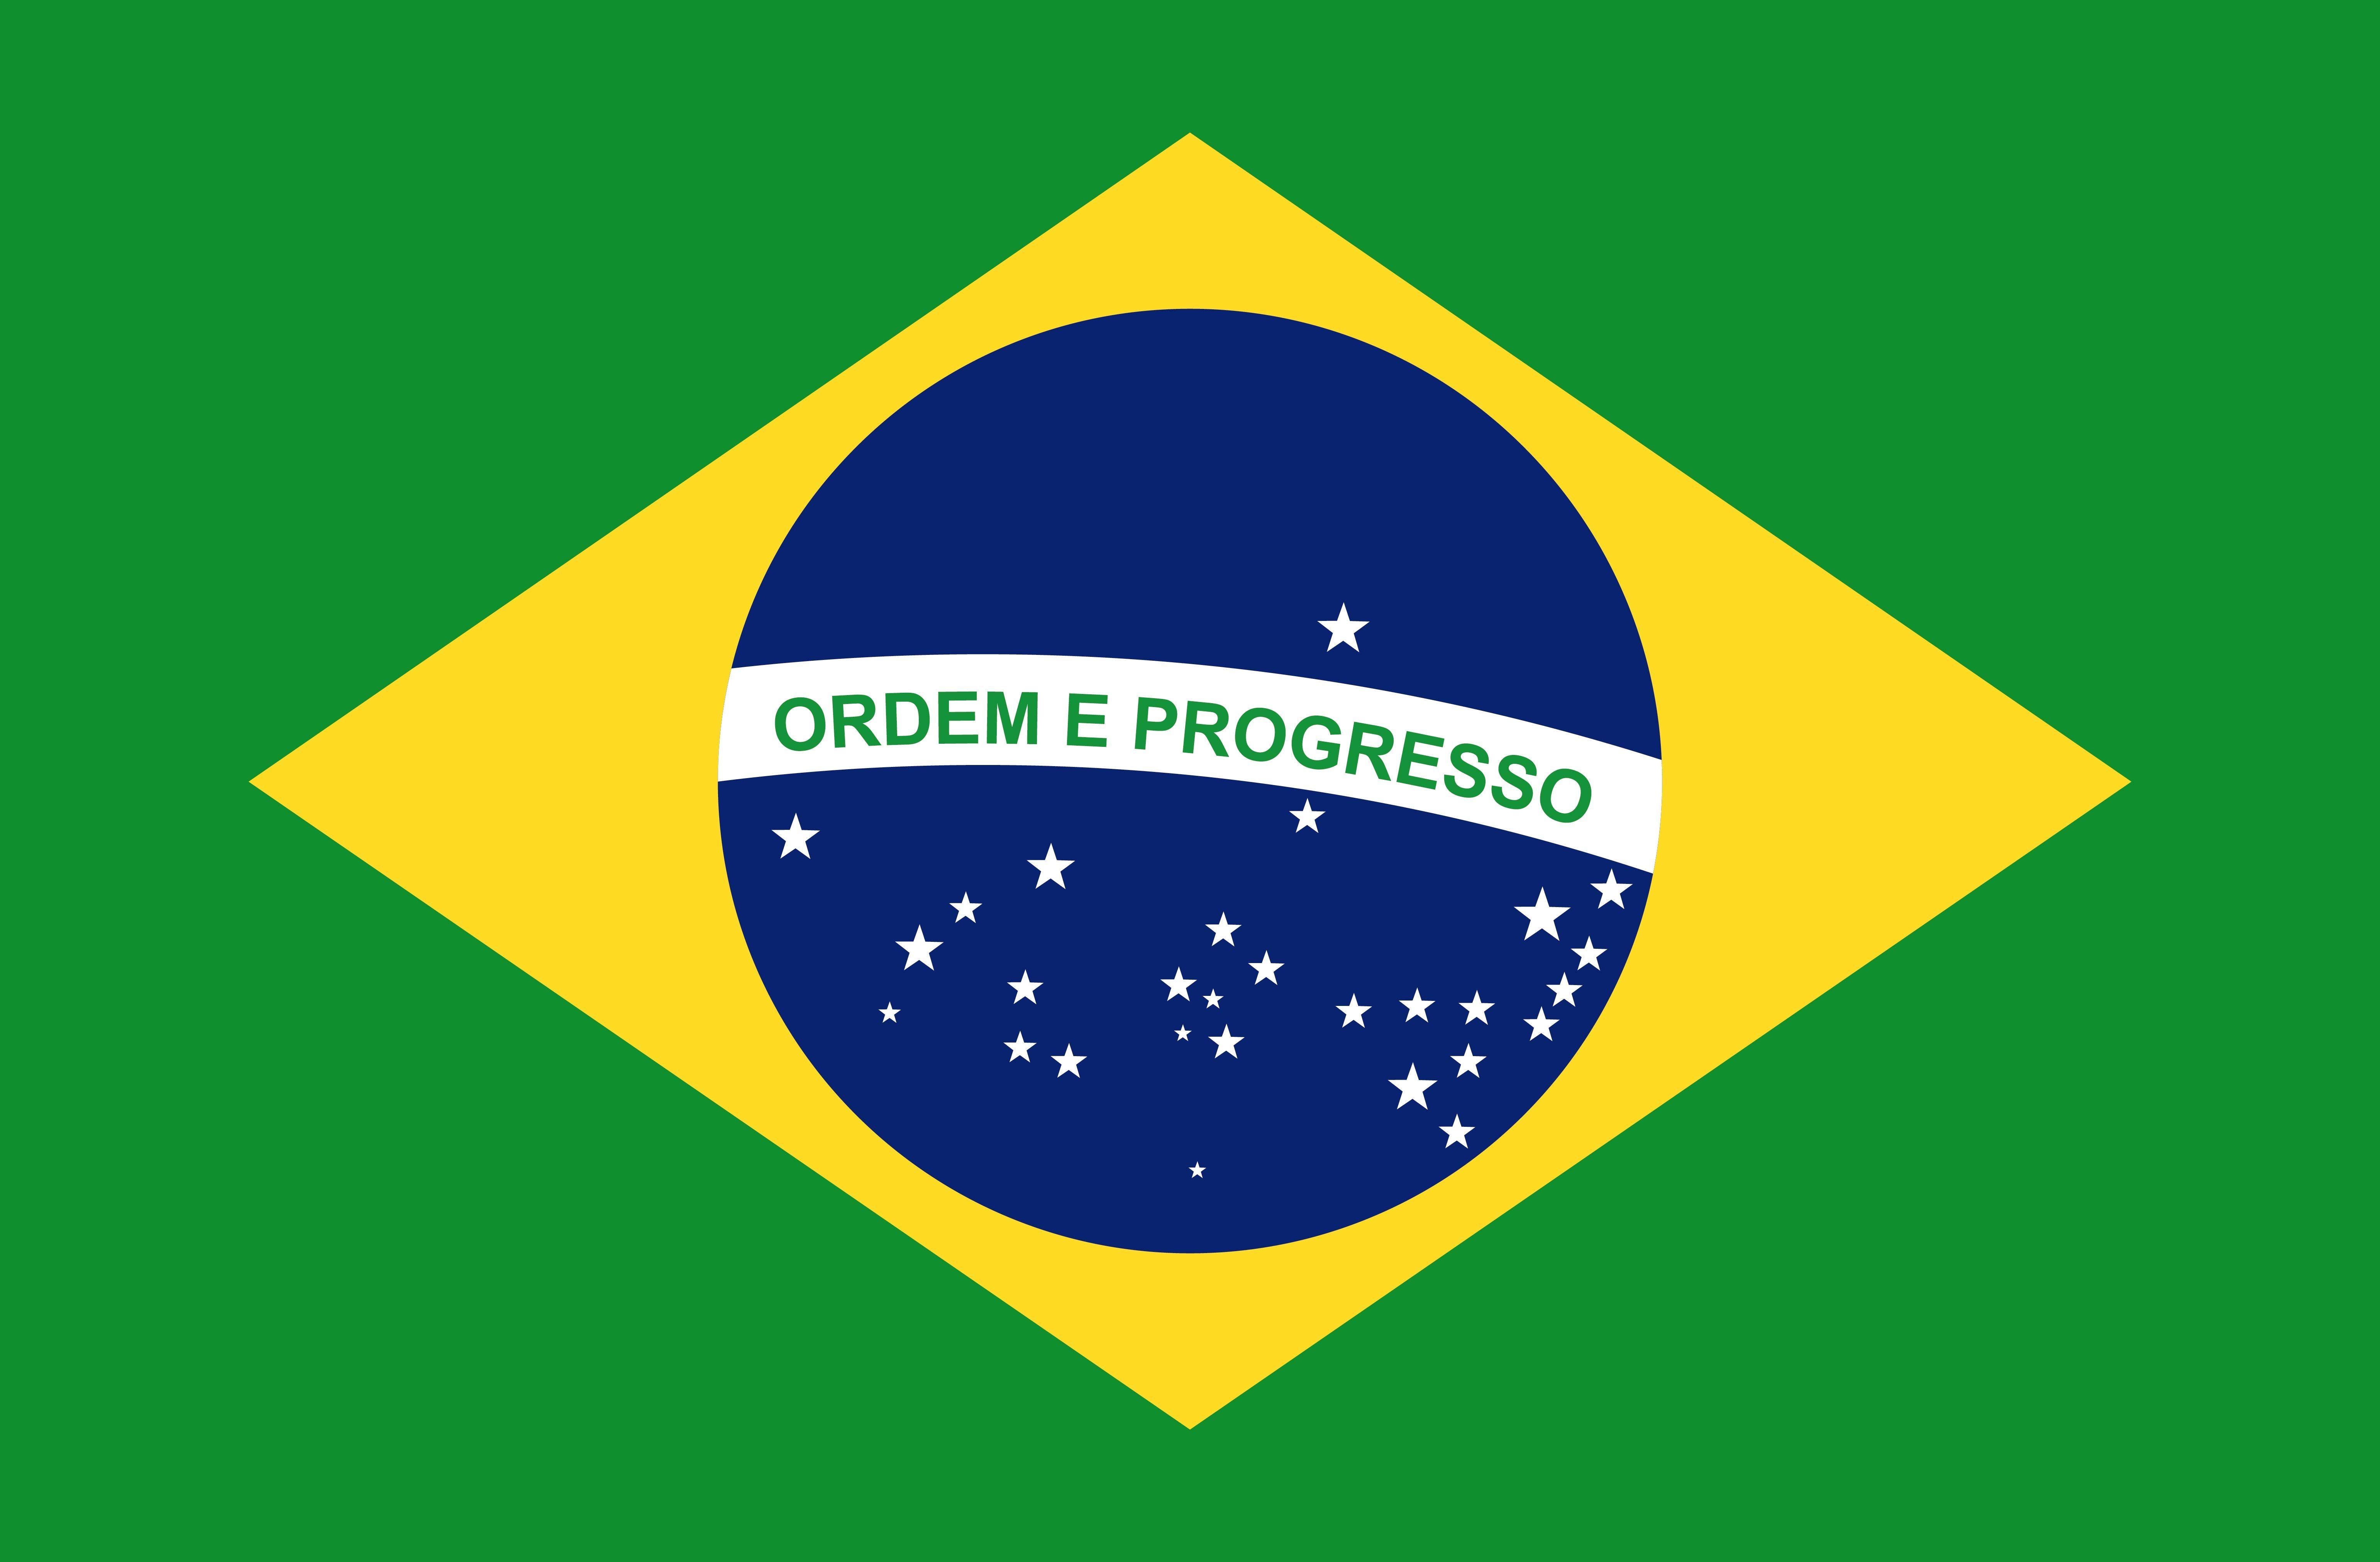 ZR26: Brazil Flag Wallpaper, Brazil Flag Pics In High Quality, GG.YAN